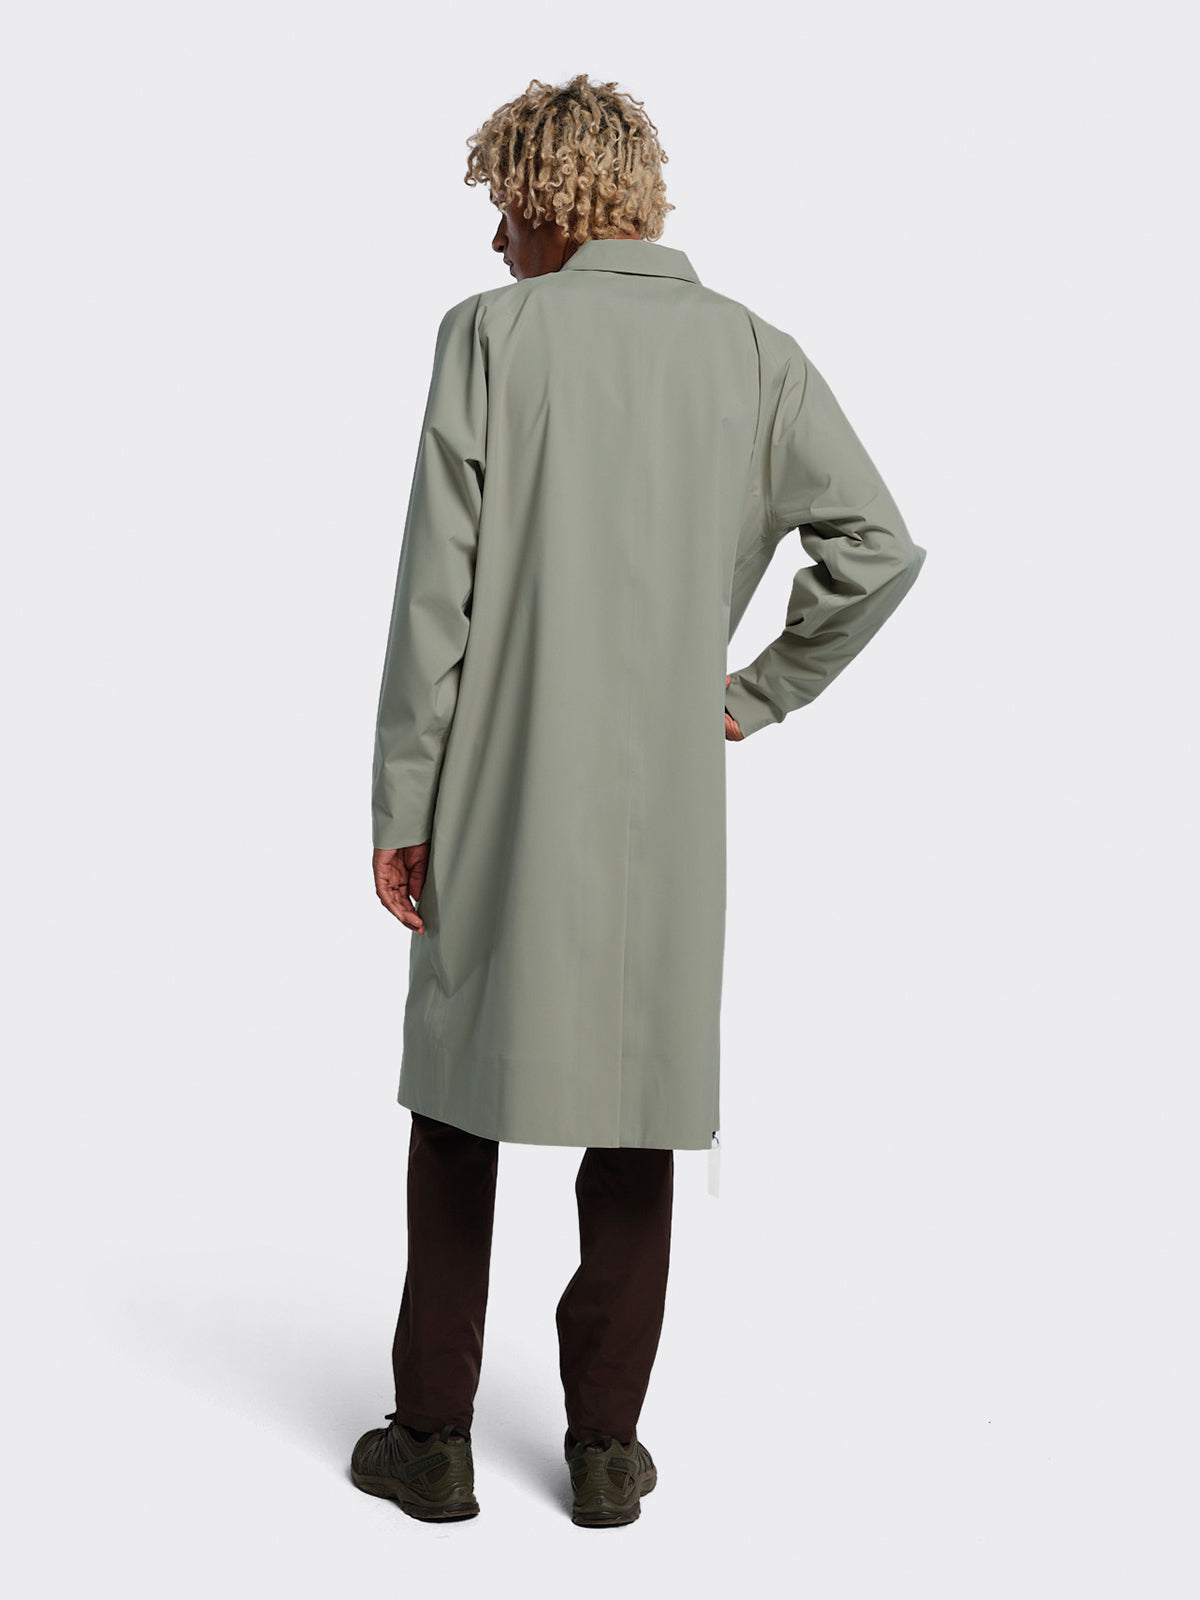 Model dressed in Stad coat by Blæst in the color Vetiver